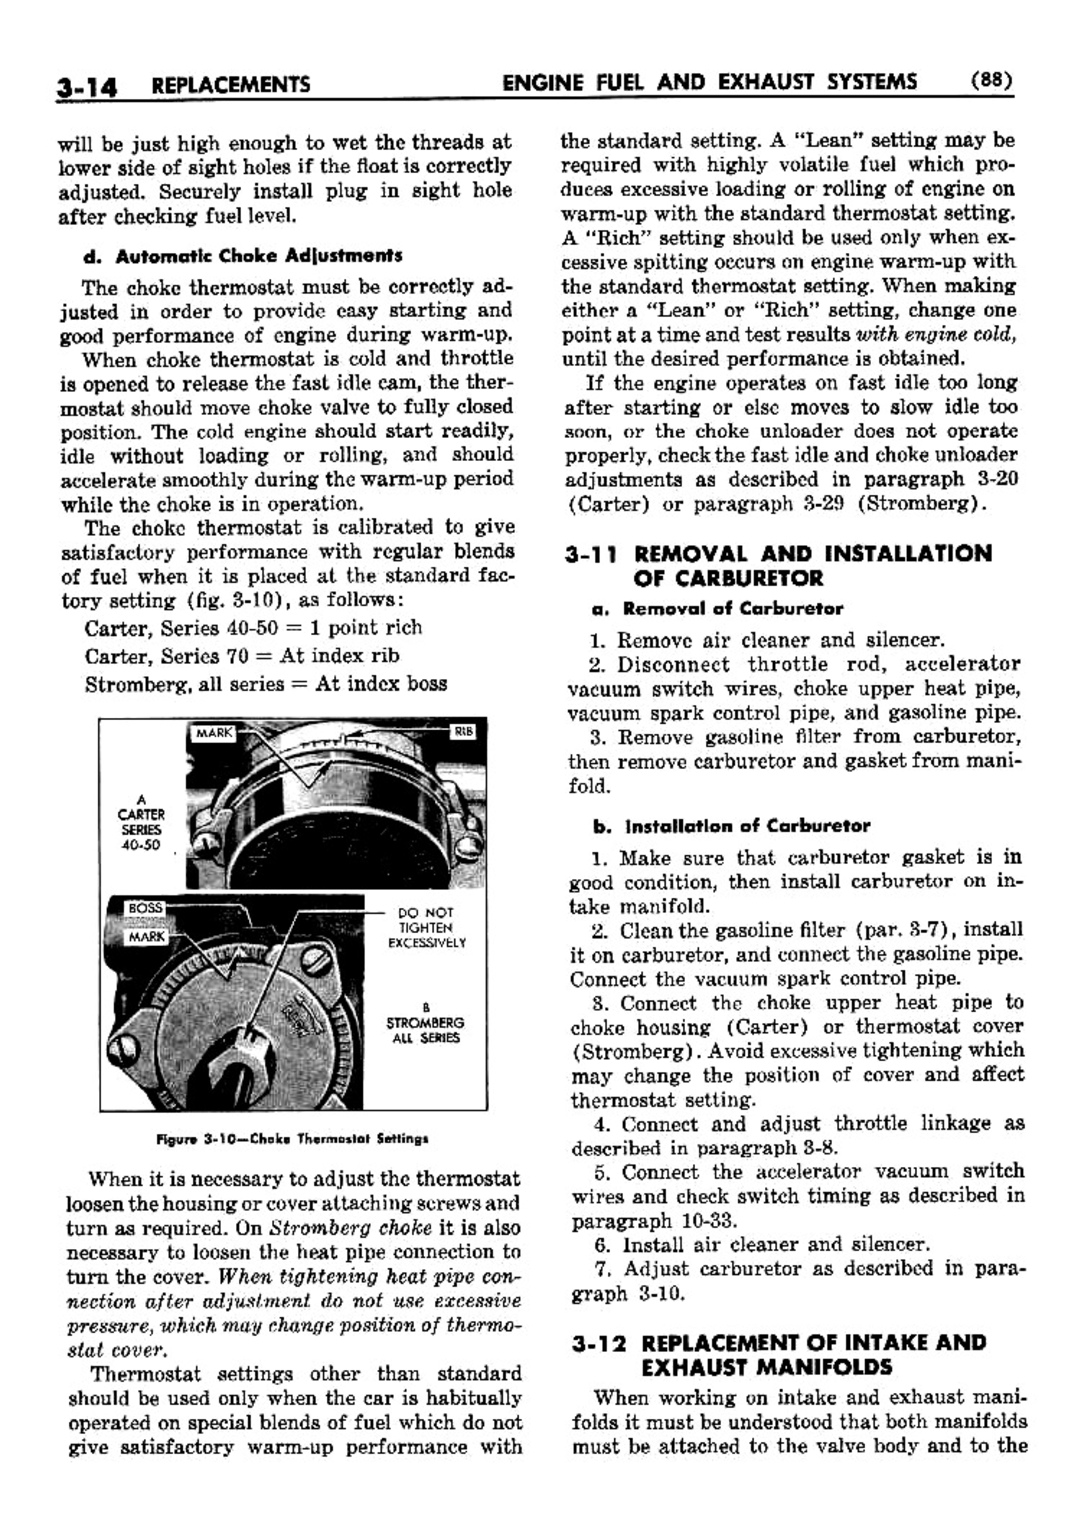 n_04 1952 Buick Shop Manual - Engine Fuel & Exhaust-014-014.jpg